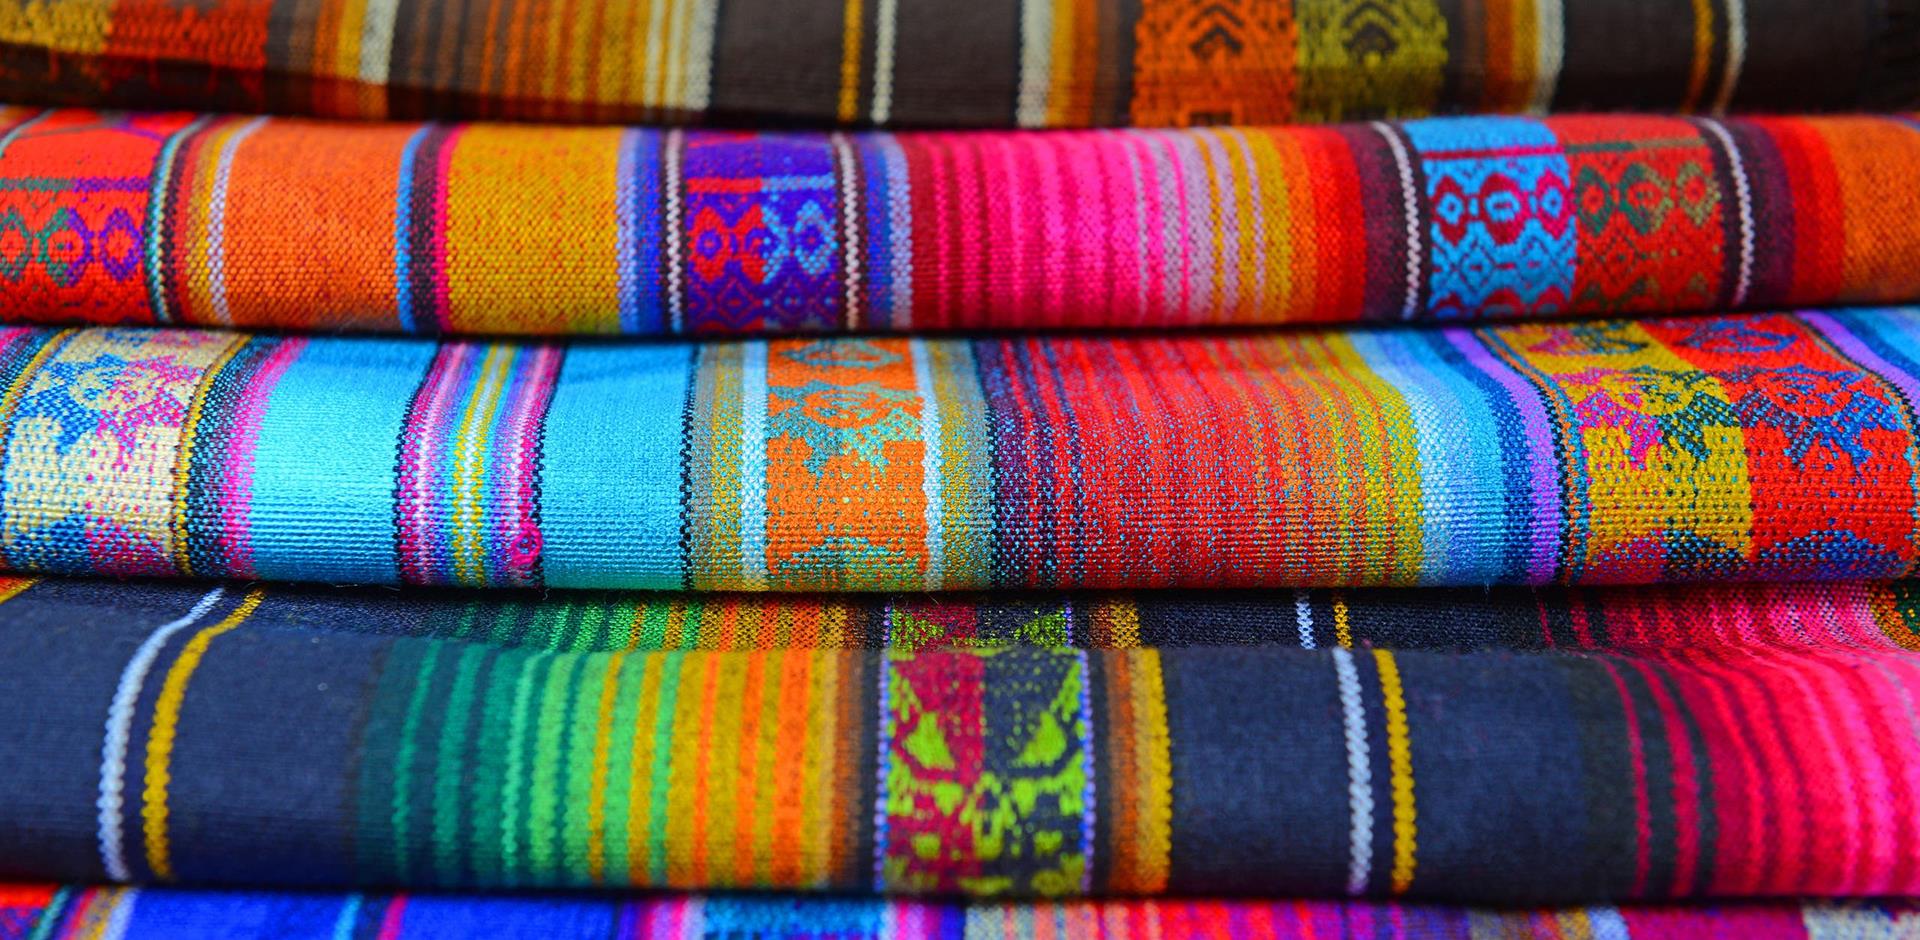 Woven fabrics from Otavalo, Ecuador